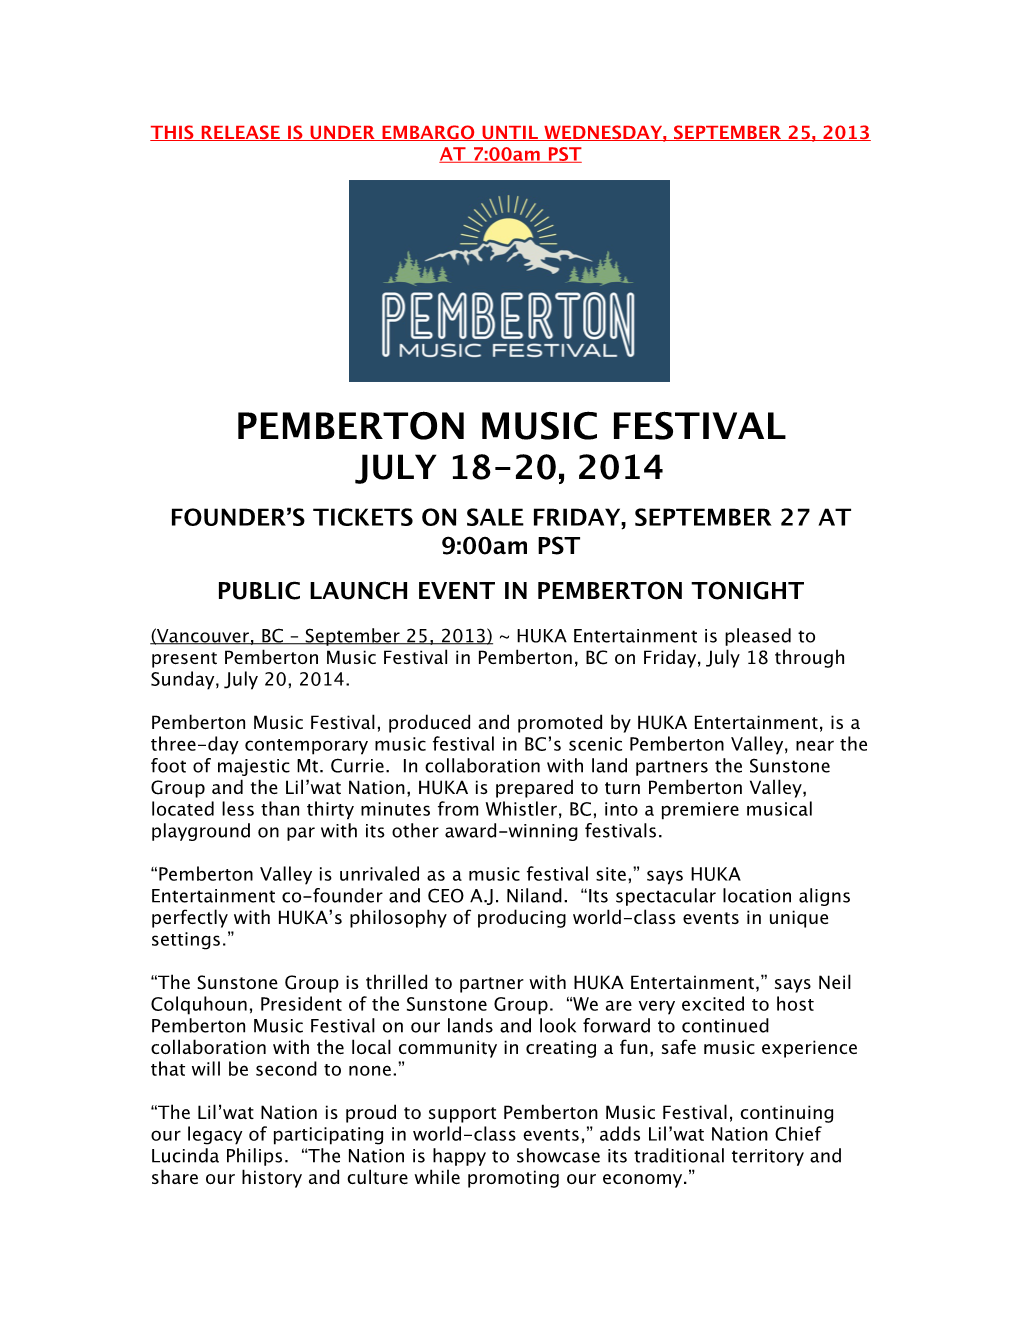 Pemberton Music Festival Press Release 6